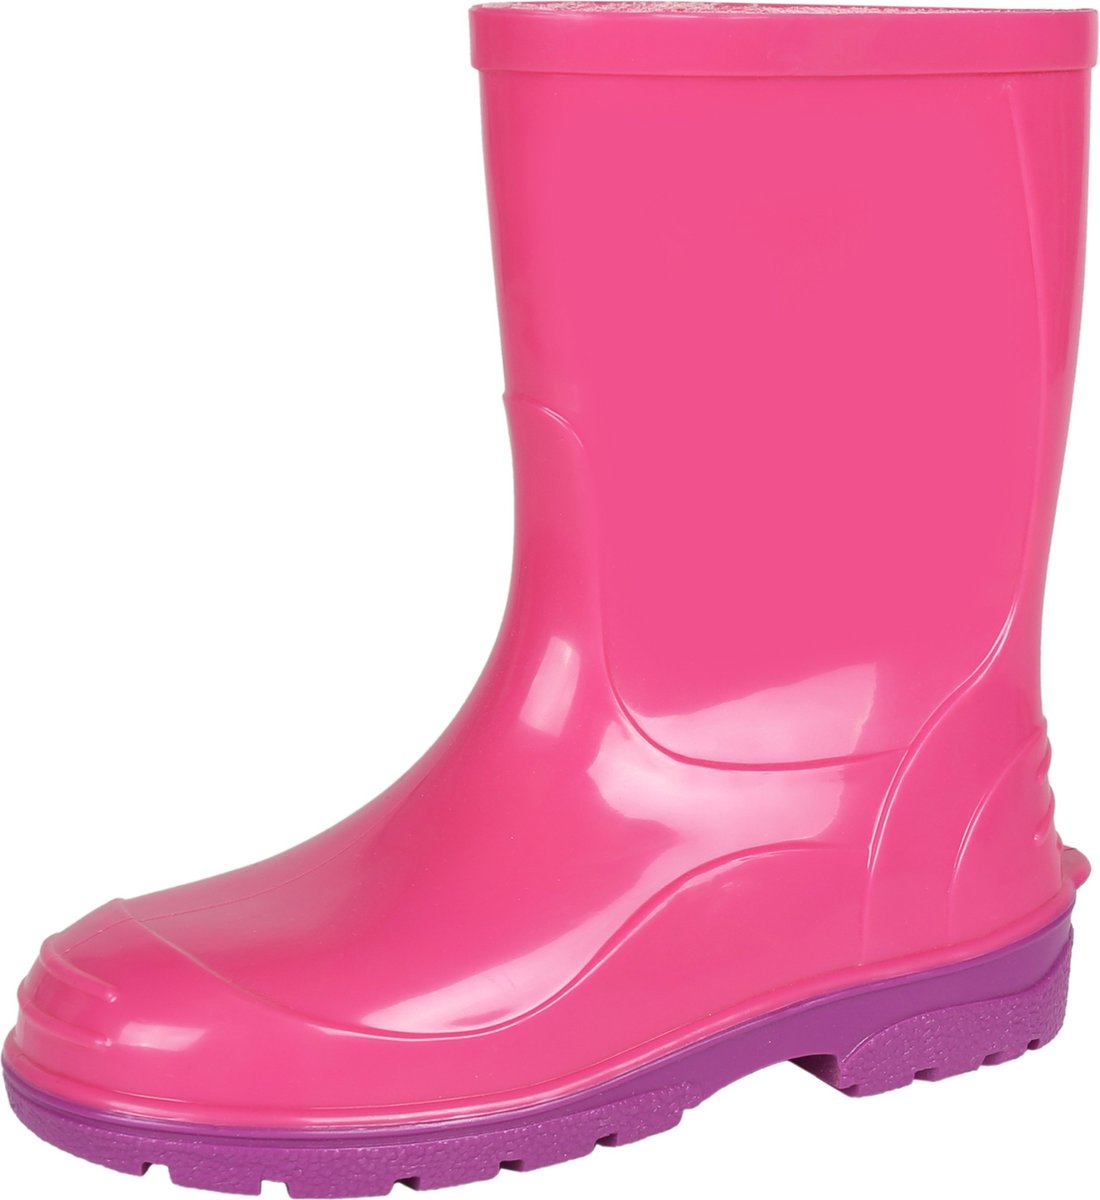 Roze laarzen met paarse zool - Ola LEMIGO / 20